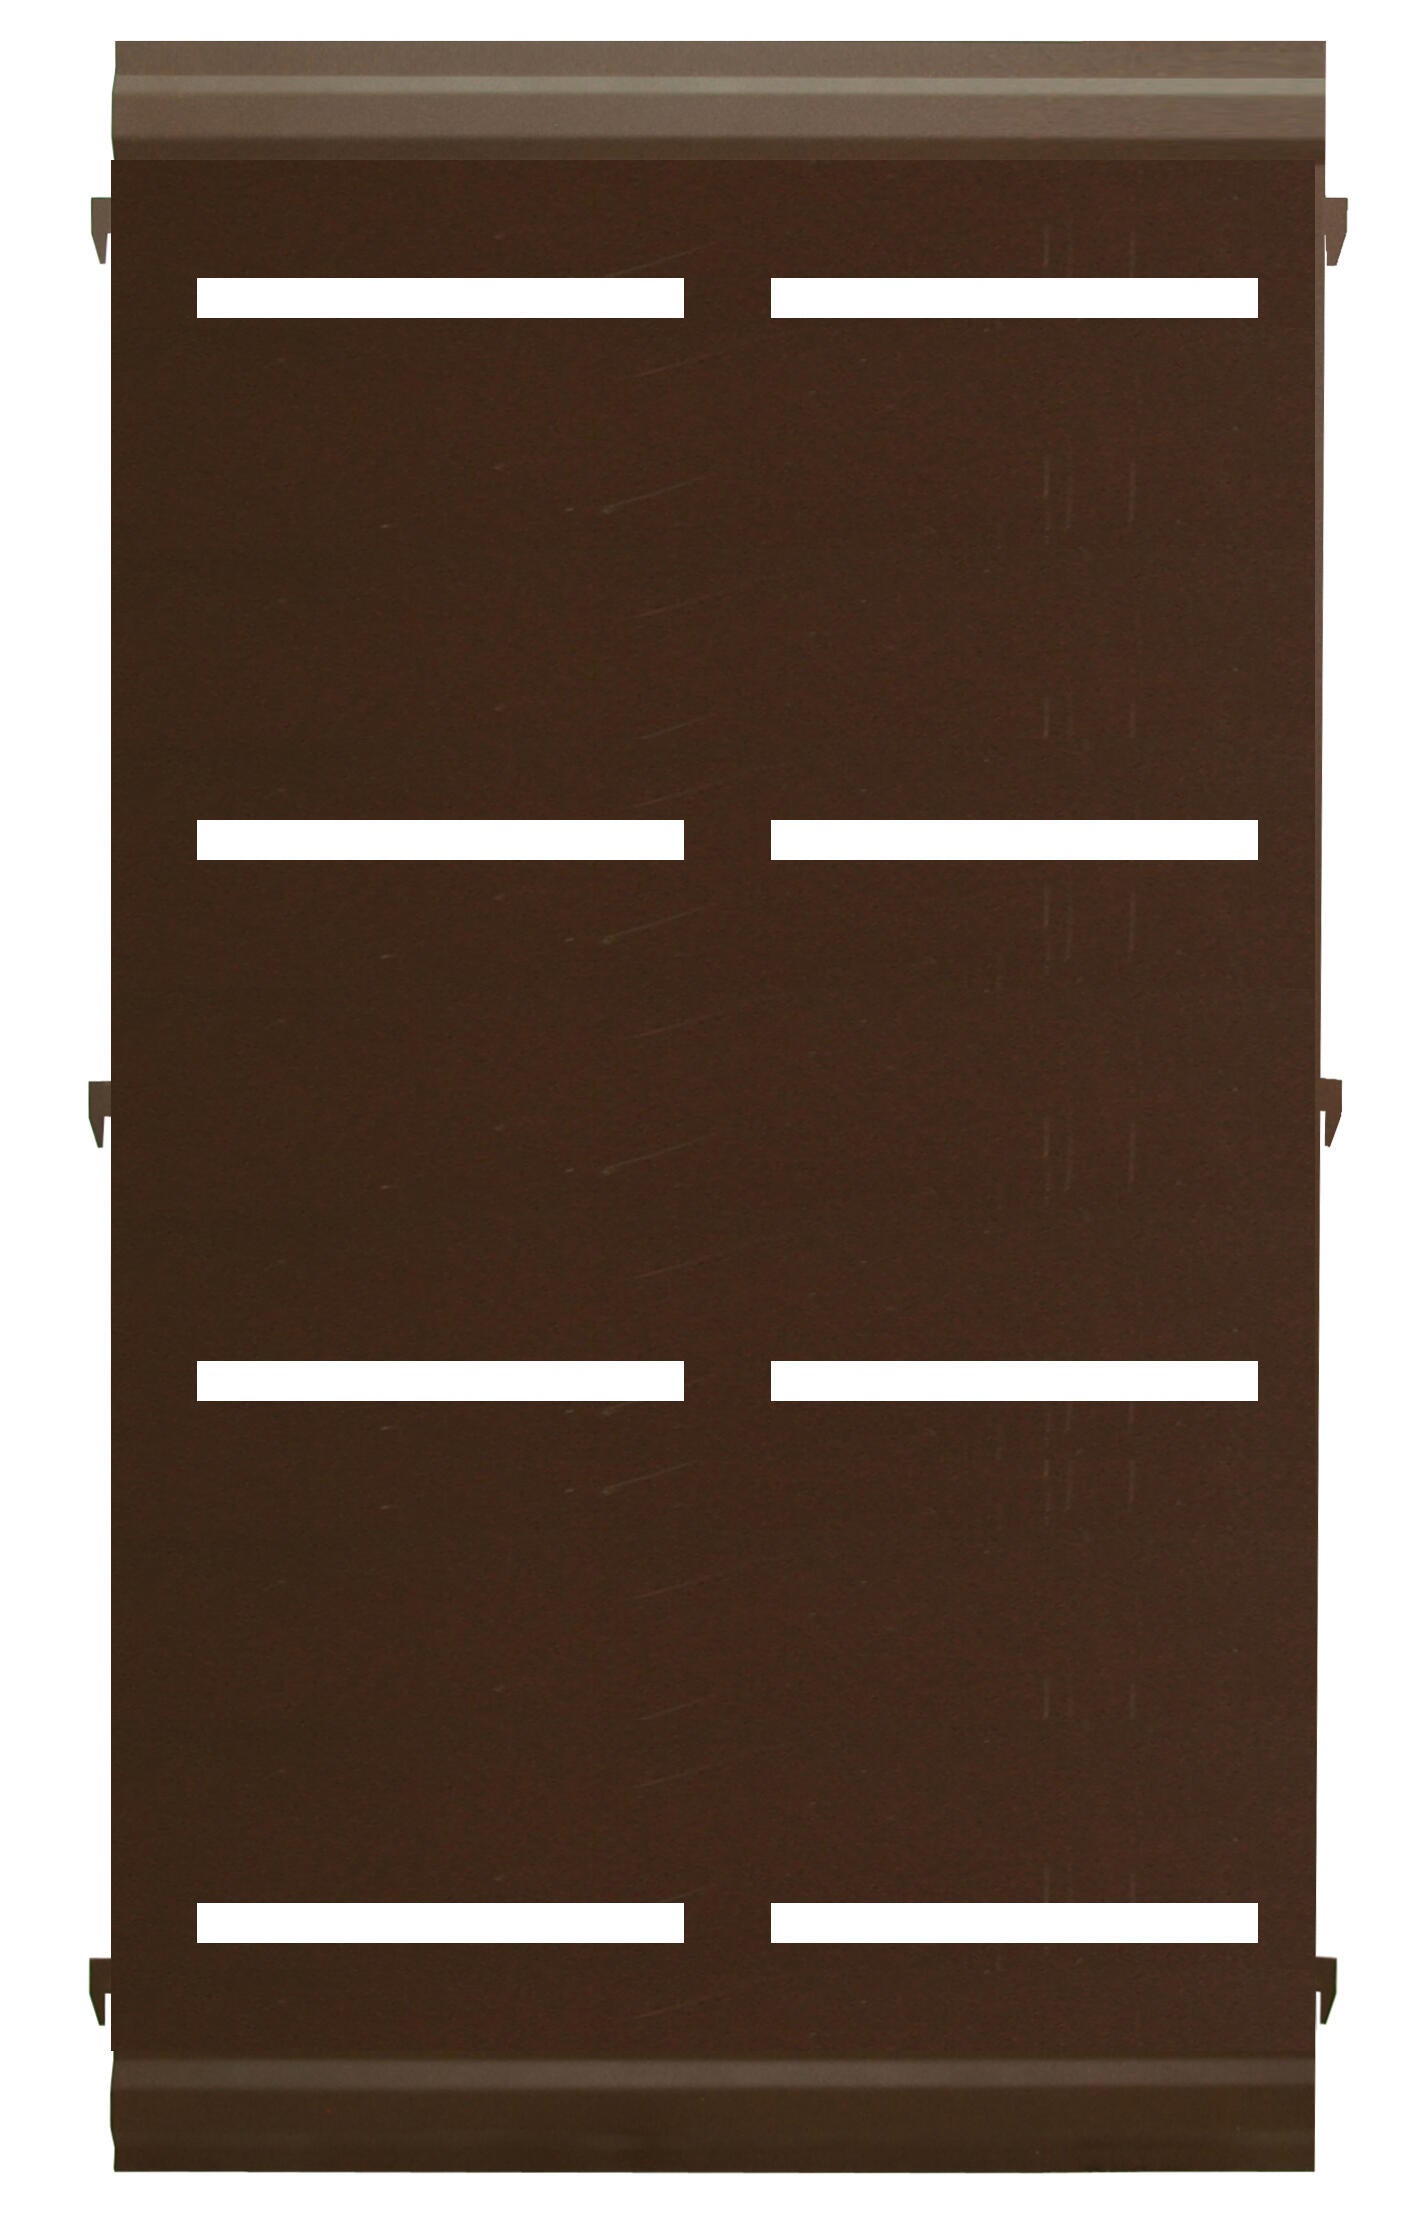 Panel remate valla acero galvanizado franja rayas marrón forja 94x52,5 cm